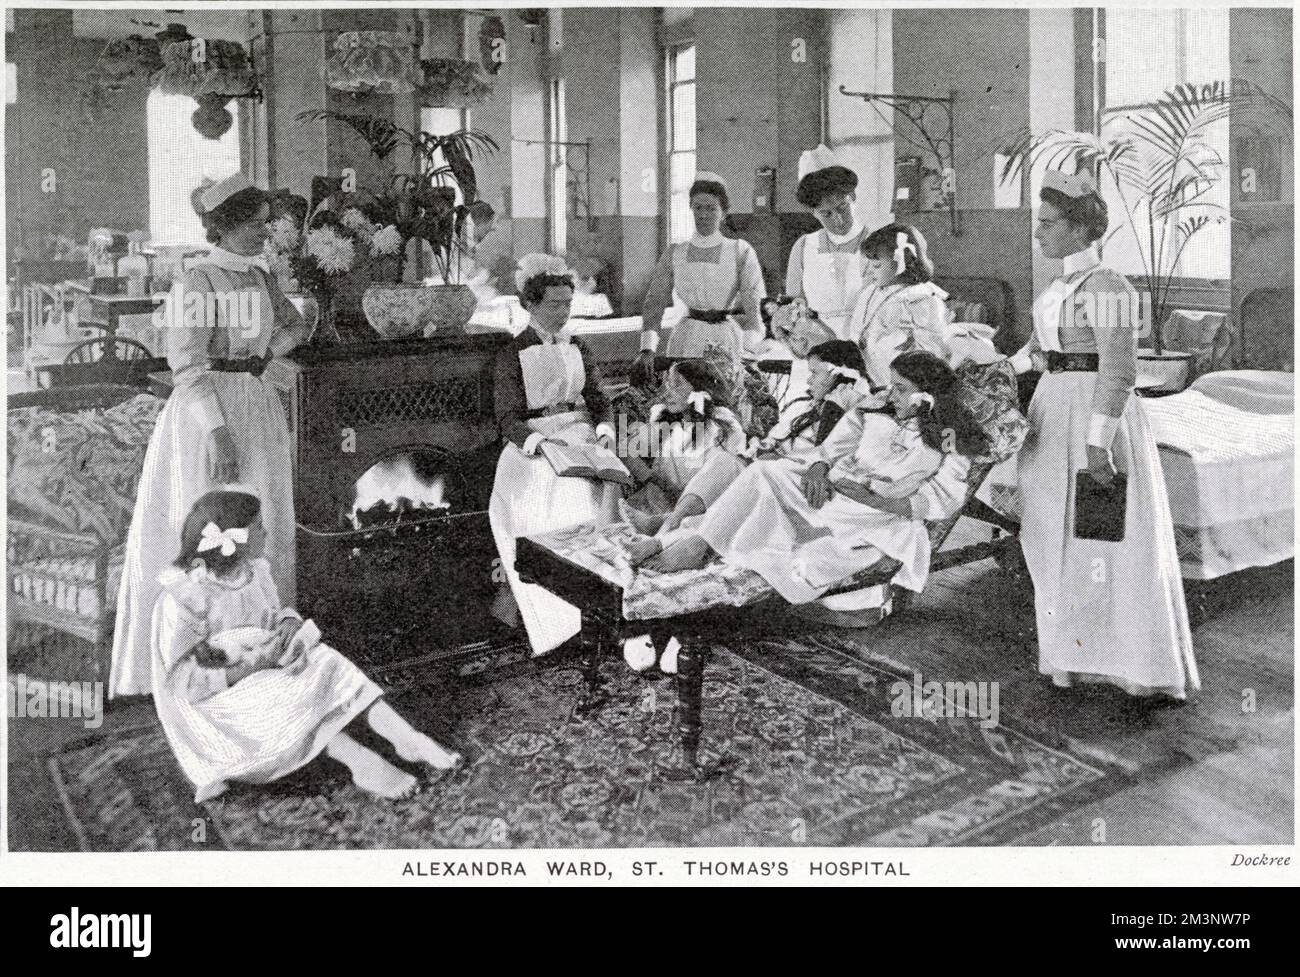 Alexandra Ward, St. Thomas's Hospital, London. Photograph showing a girl's wards with comfortable furnishings. Stock Photo